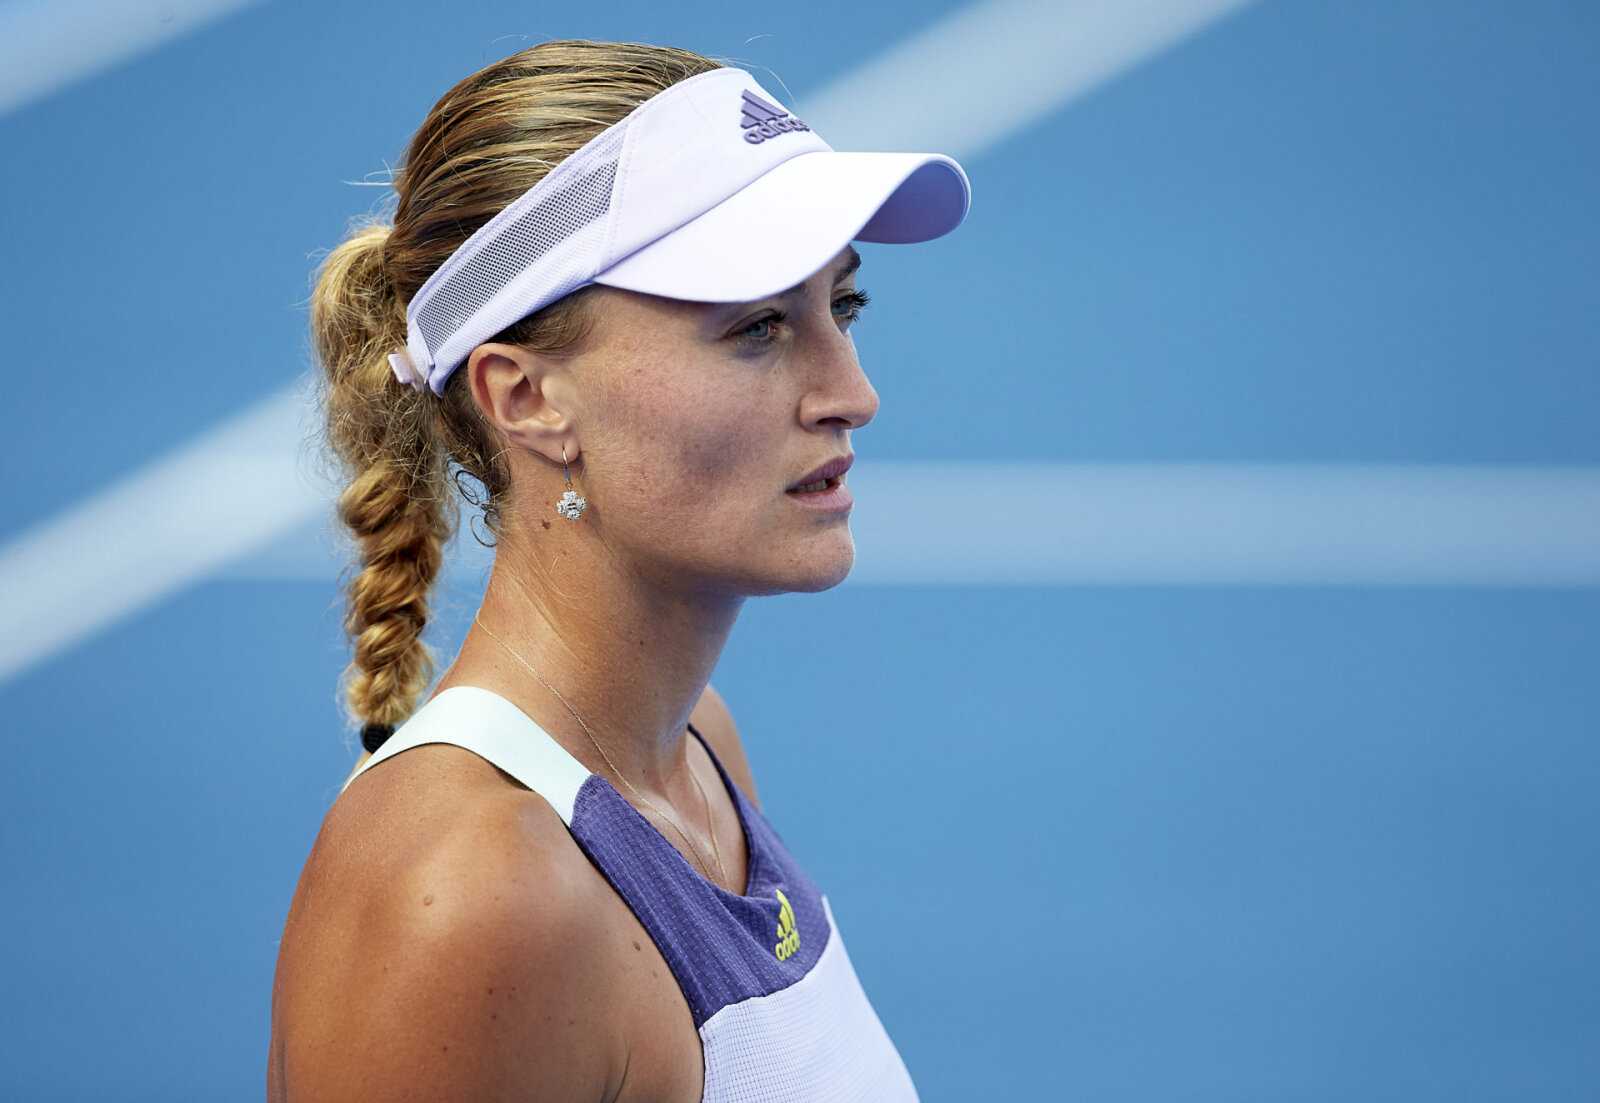 Kristina Mladenovic et Anastasia Pavlyuchenkova reçoivent une lourde amende pour conduite antisportive aux championnats de Wimbledon 2021